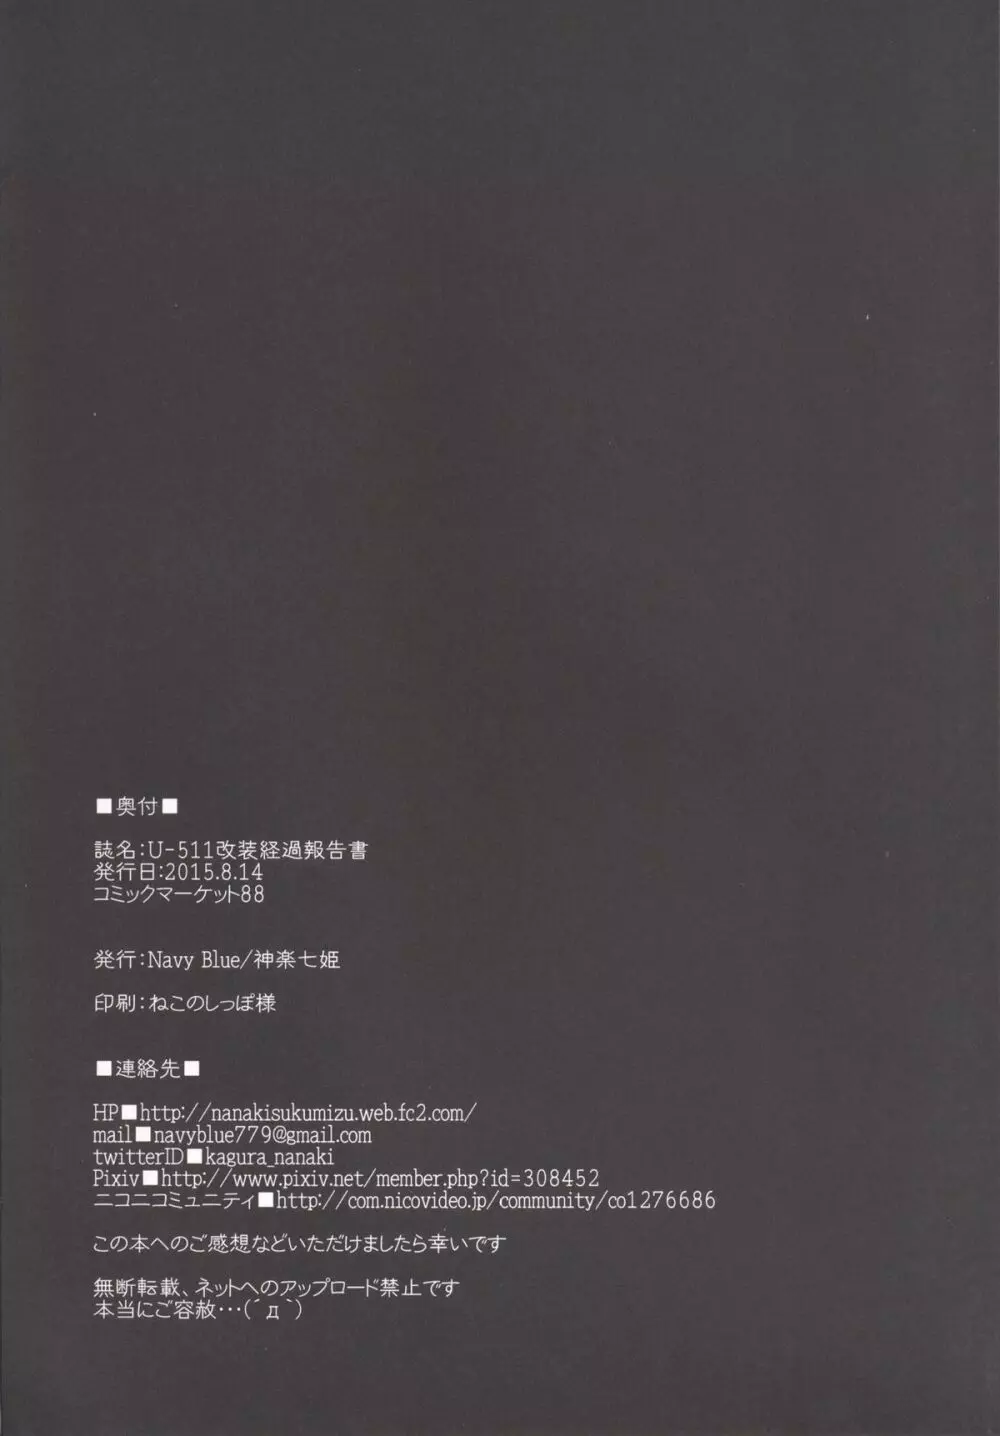 U-511改装経過報告書 - page21